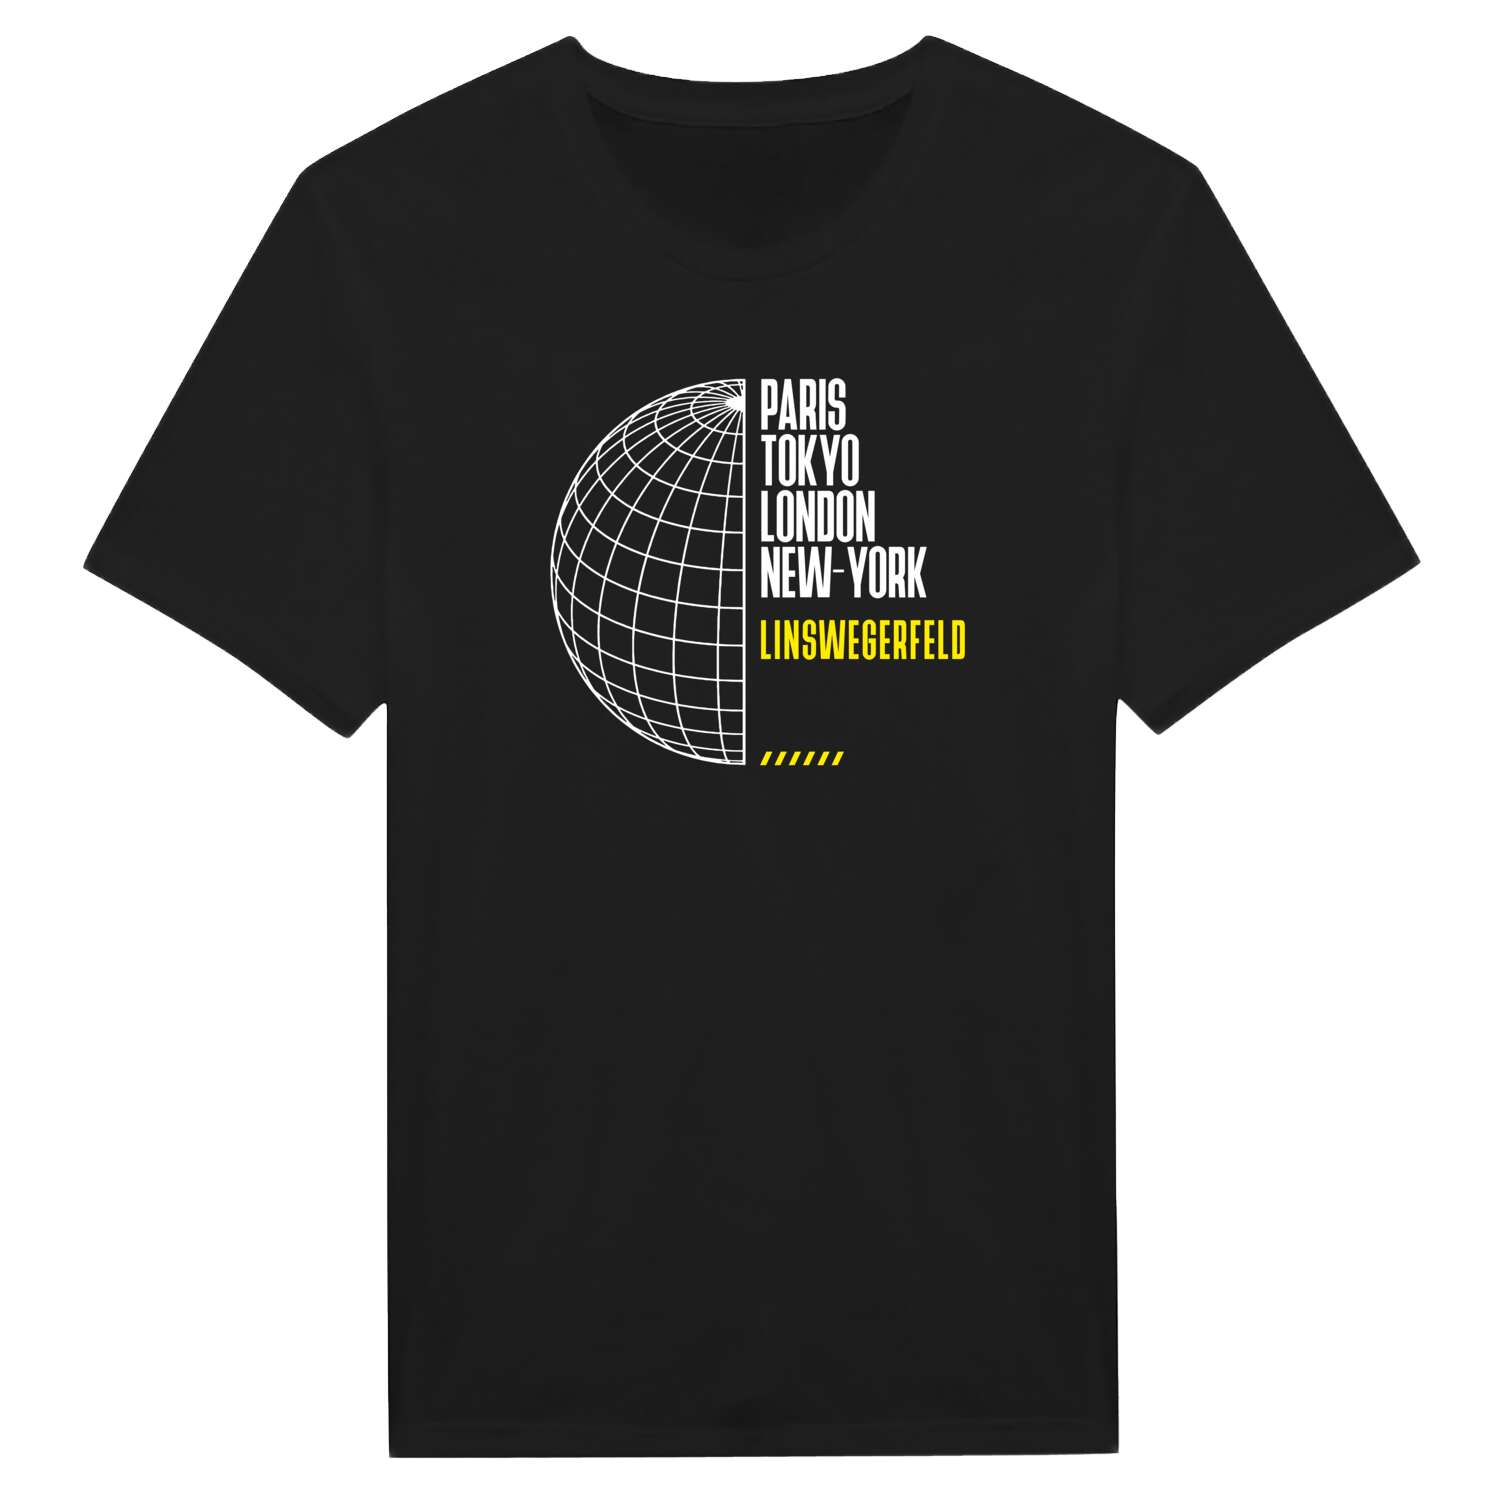 Linswegerfeld T-Shirt »Paris Tokyo London«